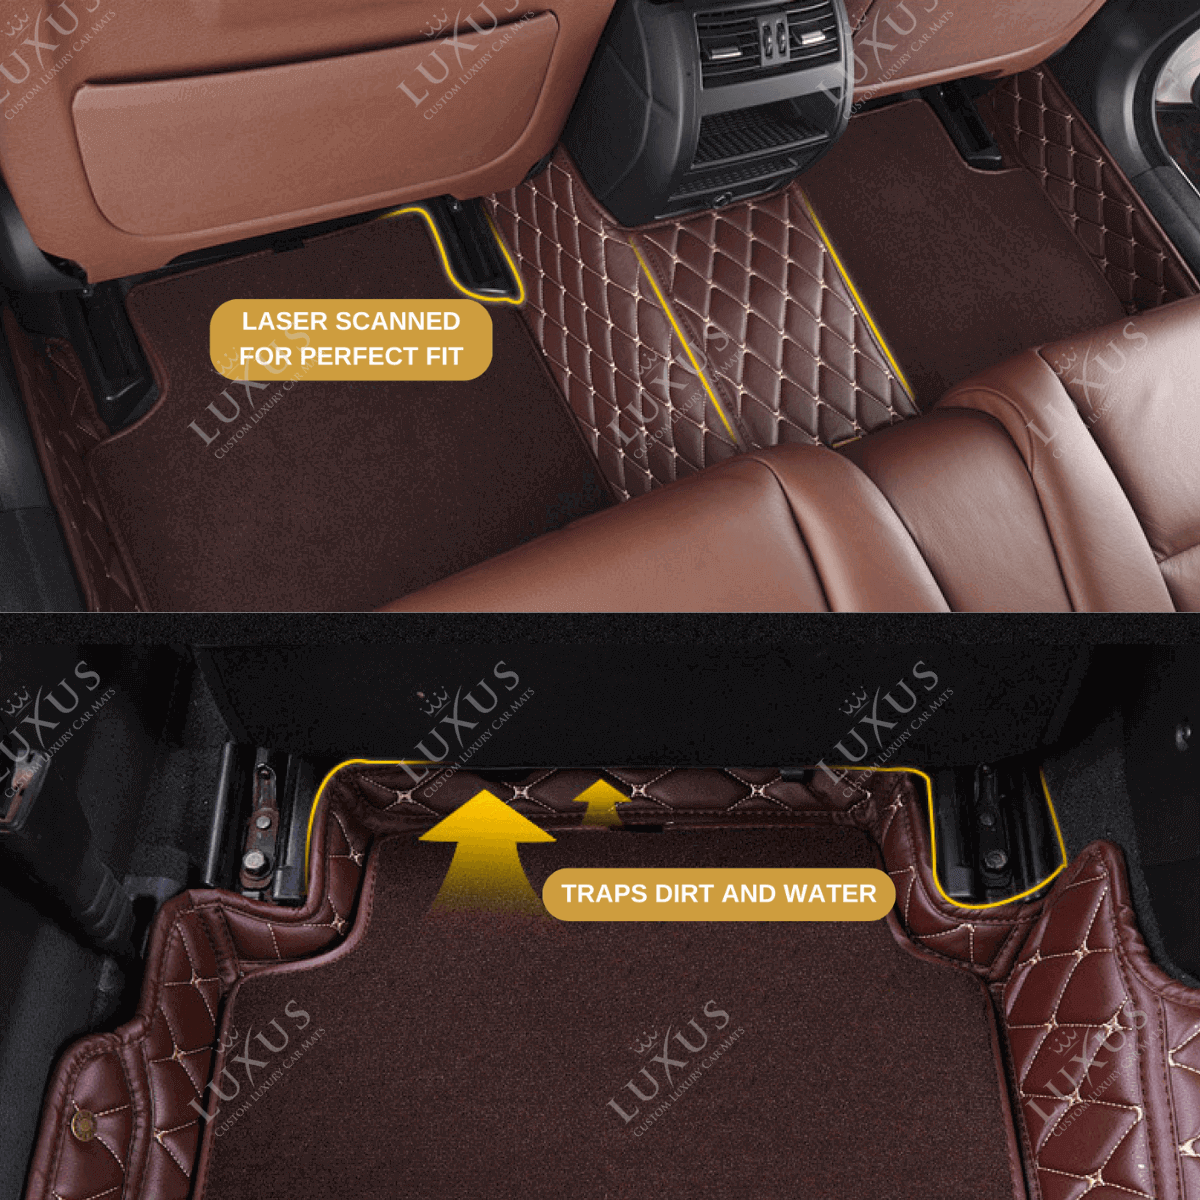 Cream Beige Honeycomb Base & Black Top Carpet Double Layer Luxury Car Mats Set